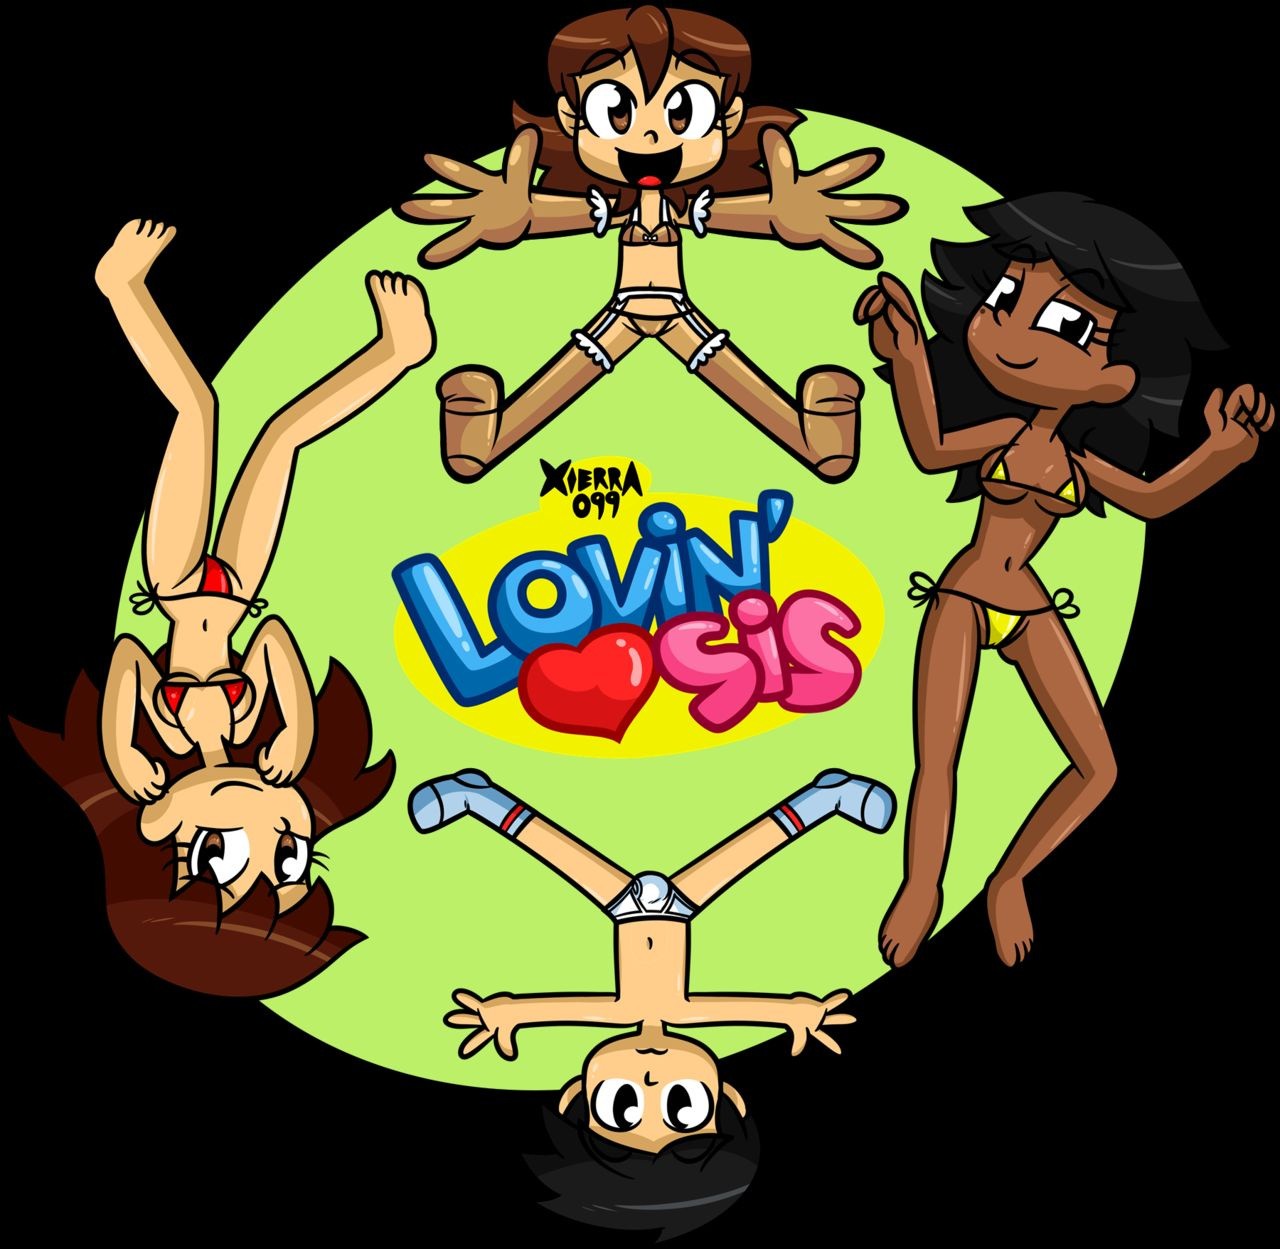 Lovin’ Sis (Season One)